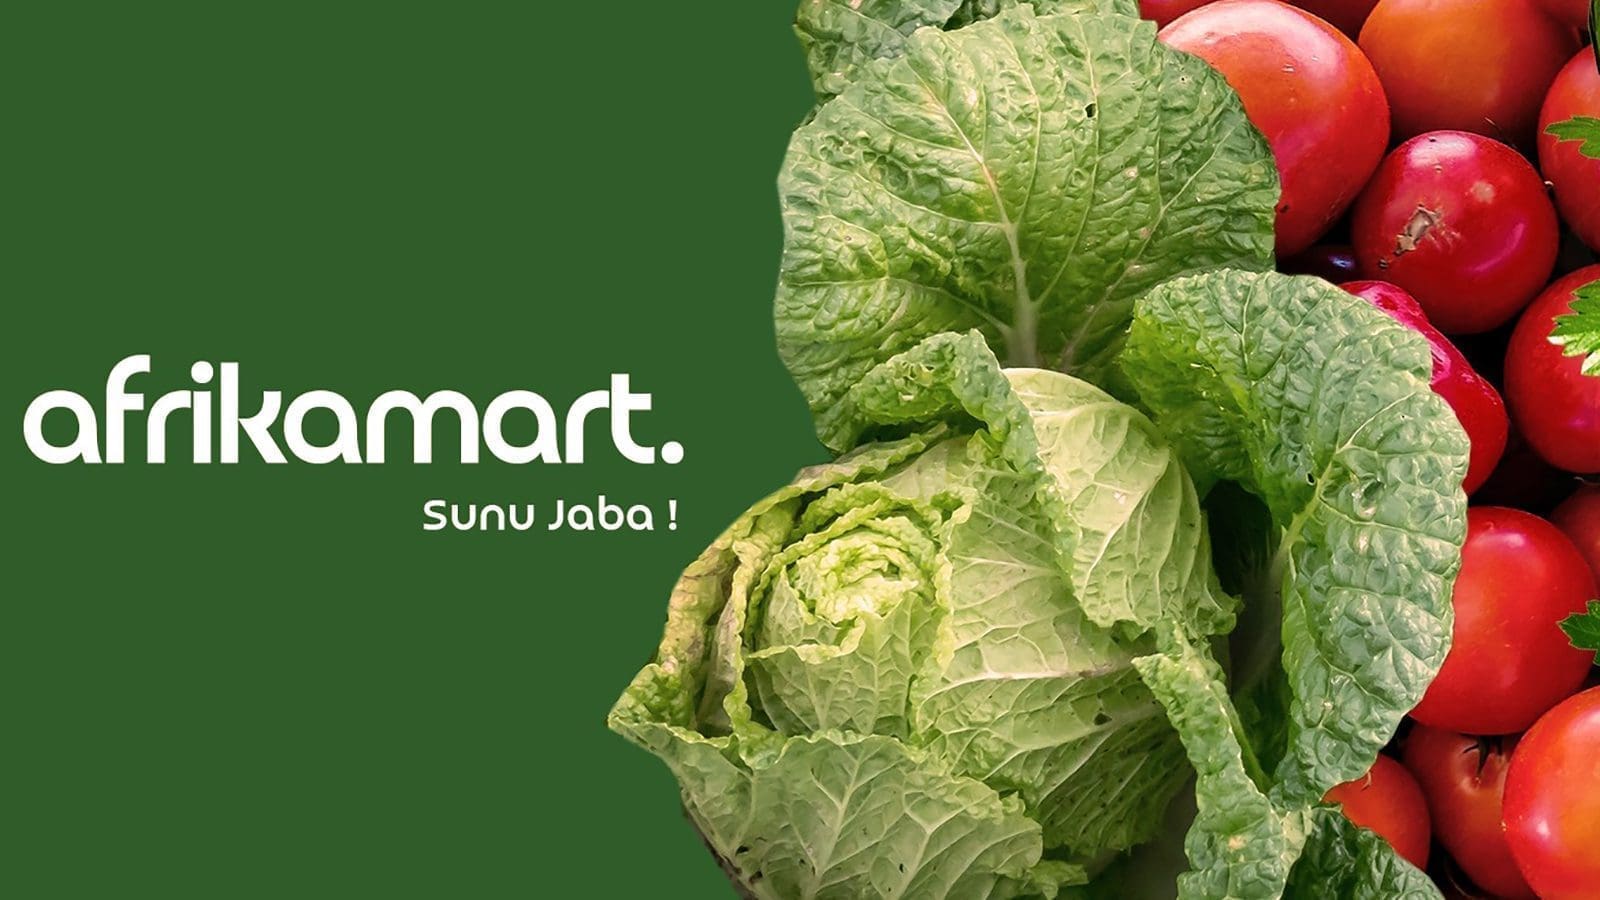 Senegalese agritech startup Afrikamart secures seed funding for expansion